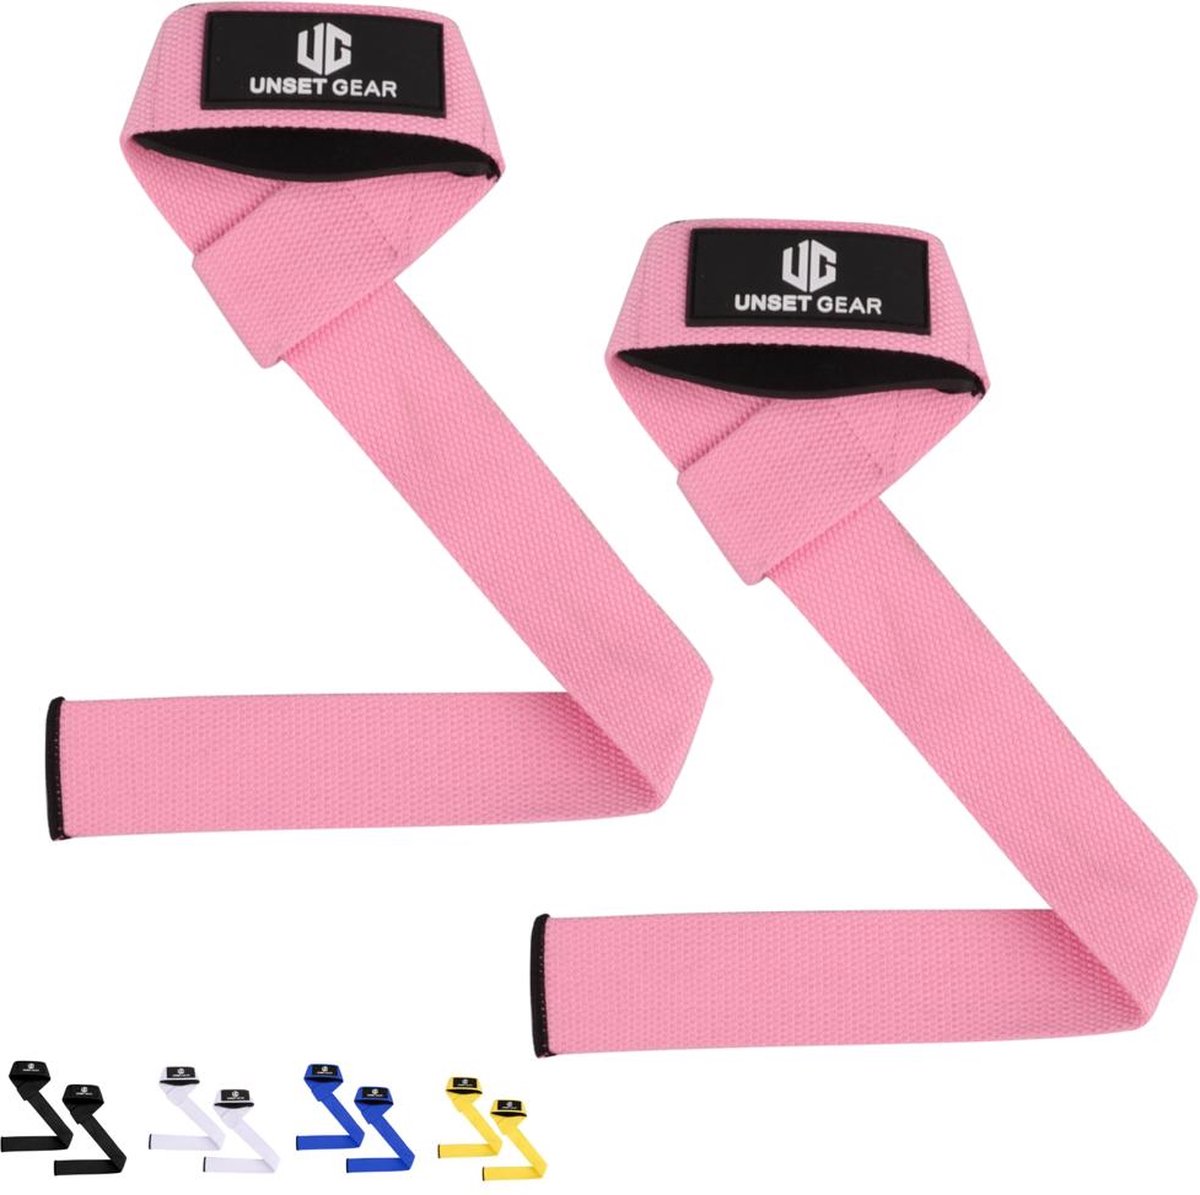 Unset Gear - Lifting straps - Roze - Fitness - Powerliften - Extra grip - Bodybuilding - hoogwaardige kwaliteit